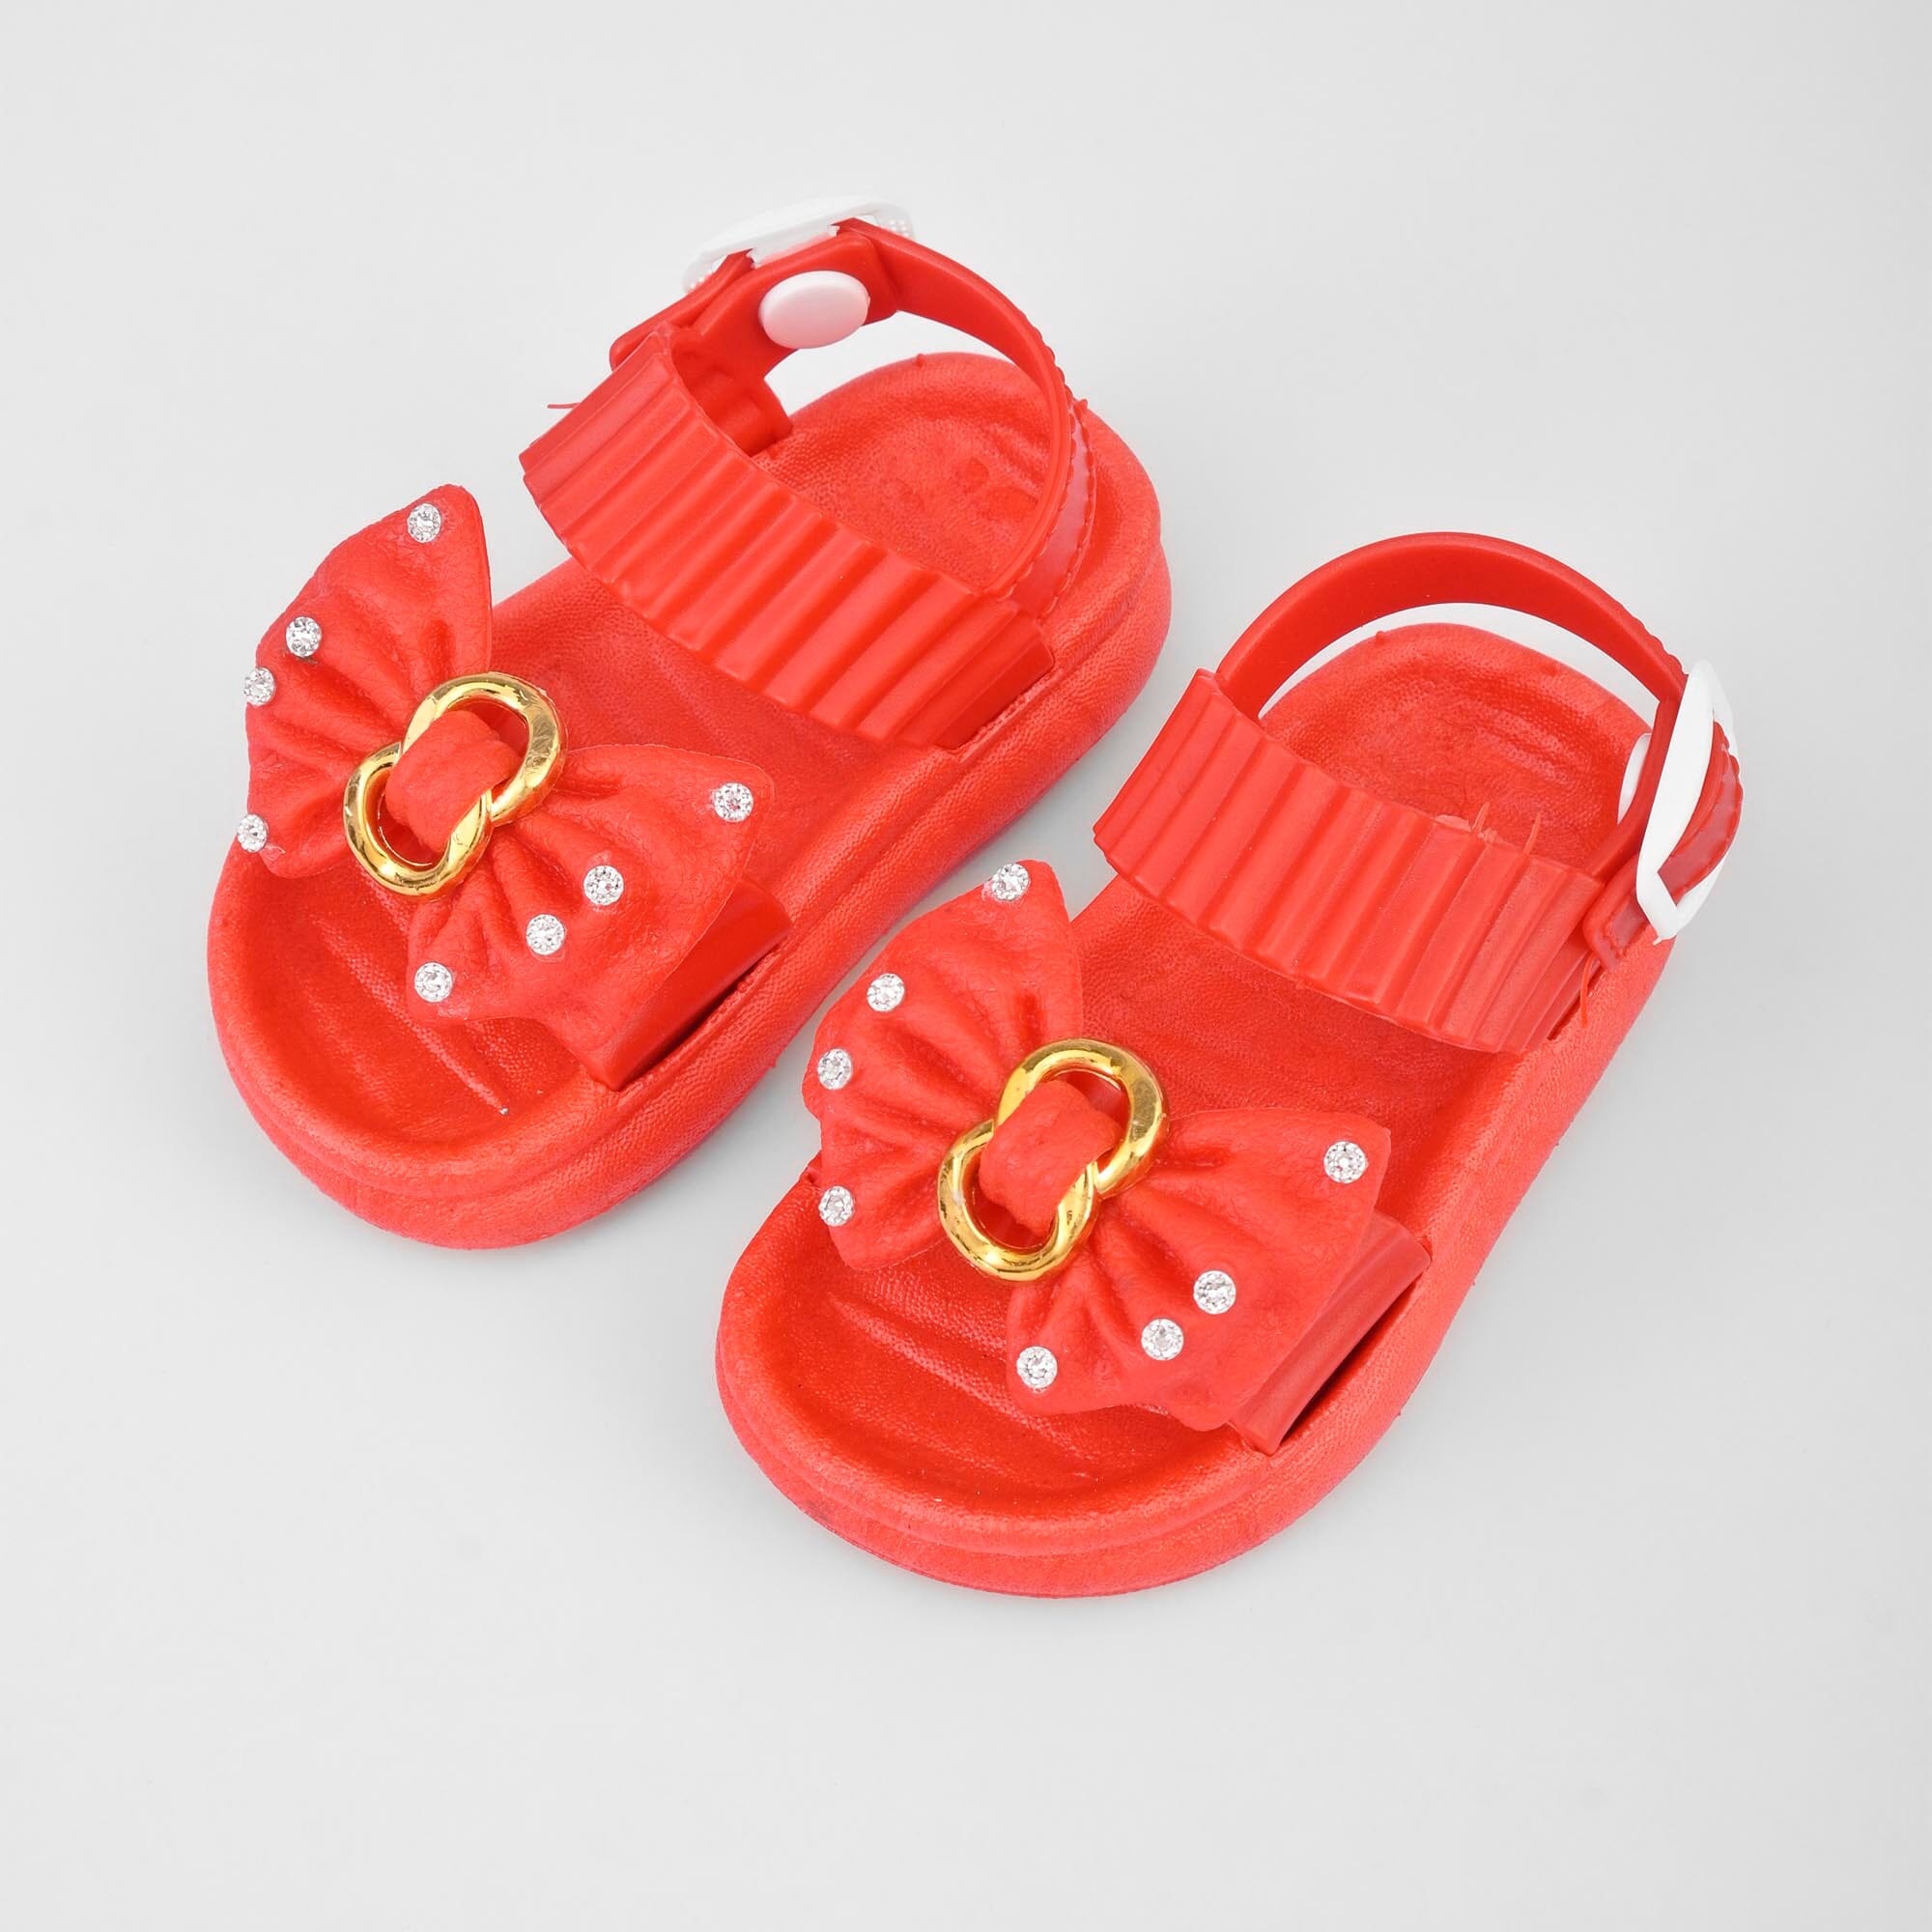 Buy YAGWALK Girls/Women's Fashion Sandal Transparent Upper Kitten Heel  Ethnic Design. at Amazon.in